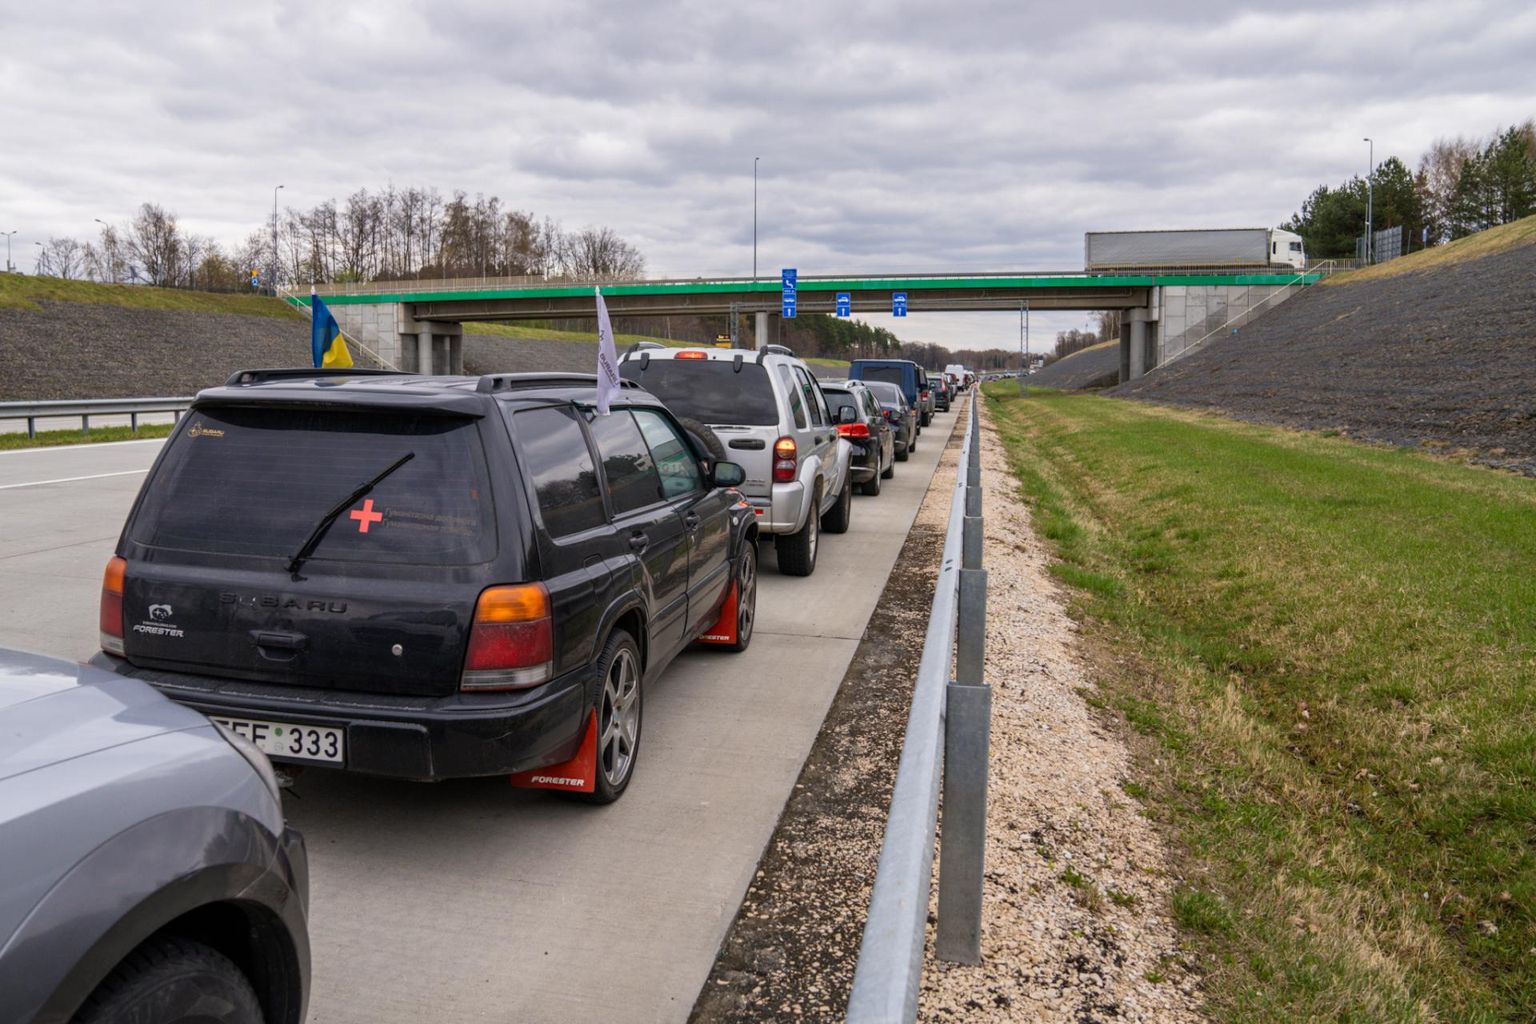 Korczowa border crossing in Poland to Ukraine.